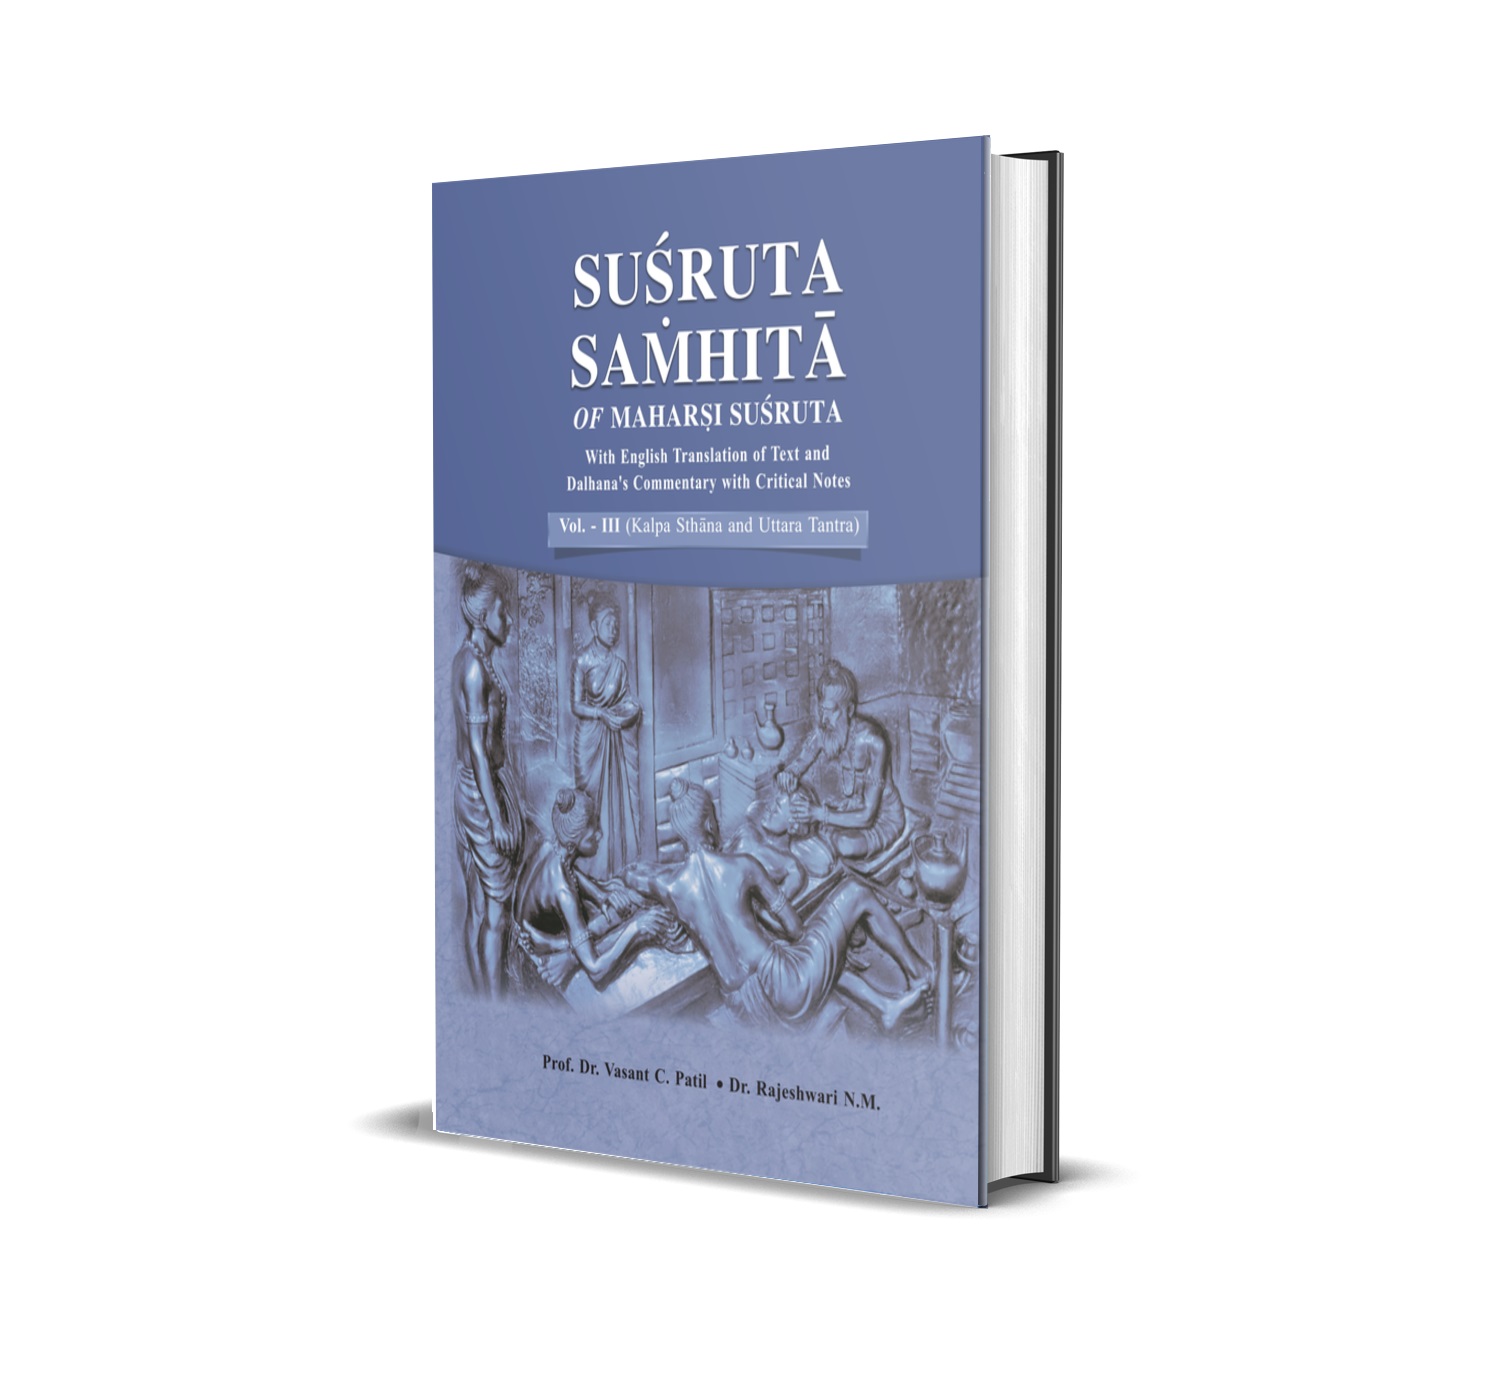 Susruta Samhita. vol - III ( Kalpa and Uttara Tantra)